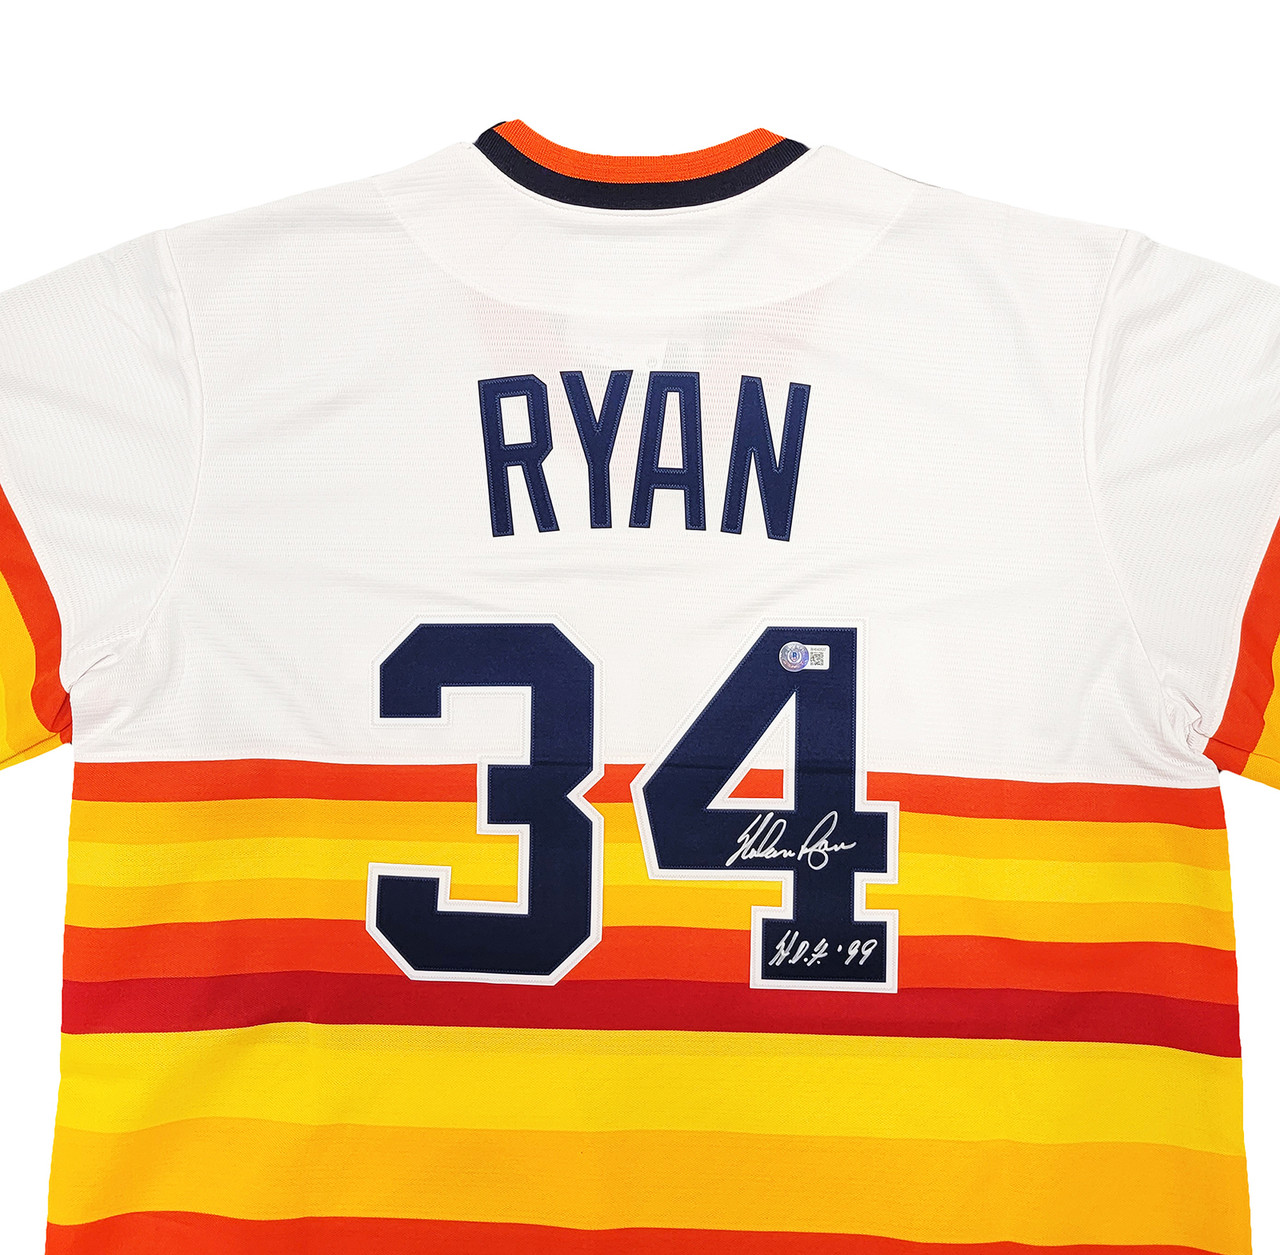 Nolan Ryan Houston Astros Fanatics Authentic Autographed Rainbow Mitchell &  Ness Authentic Jersey with HOF 99